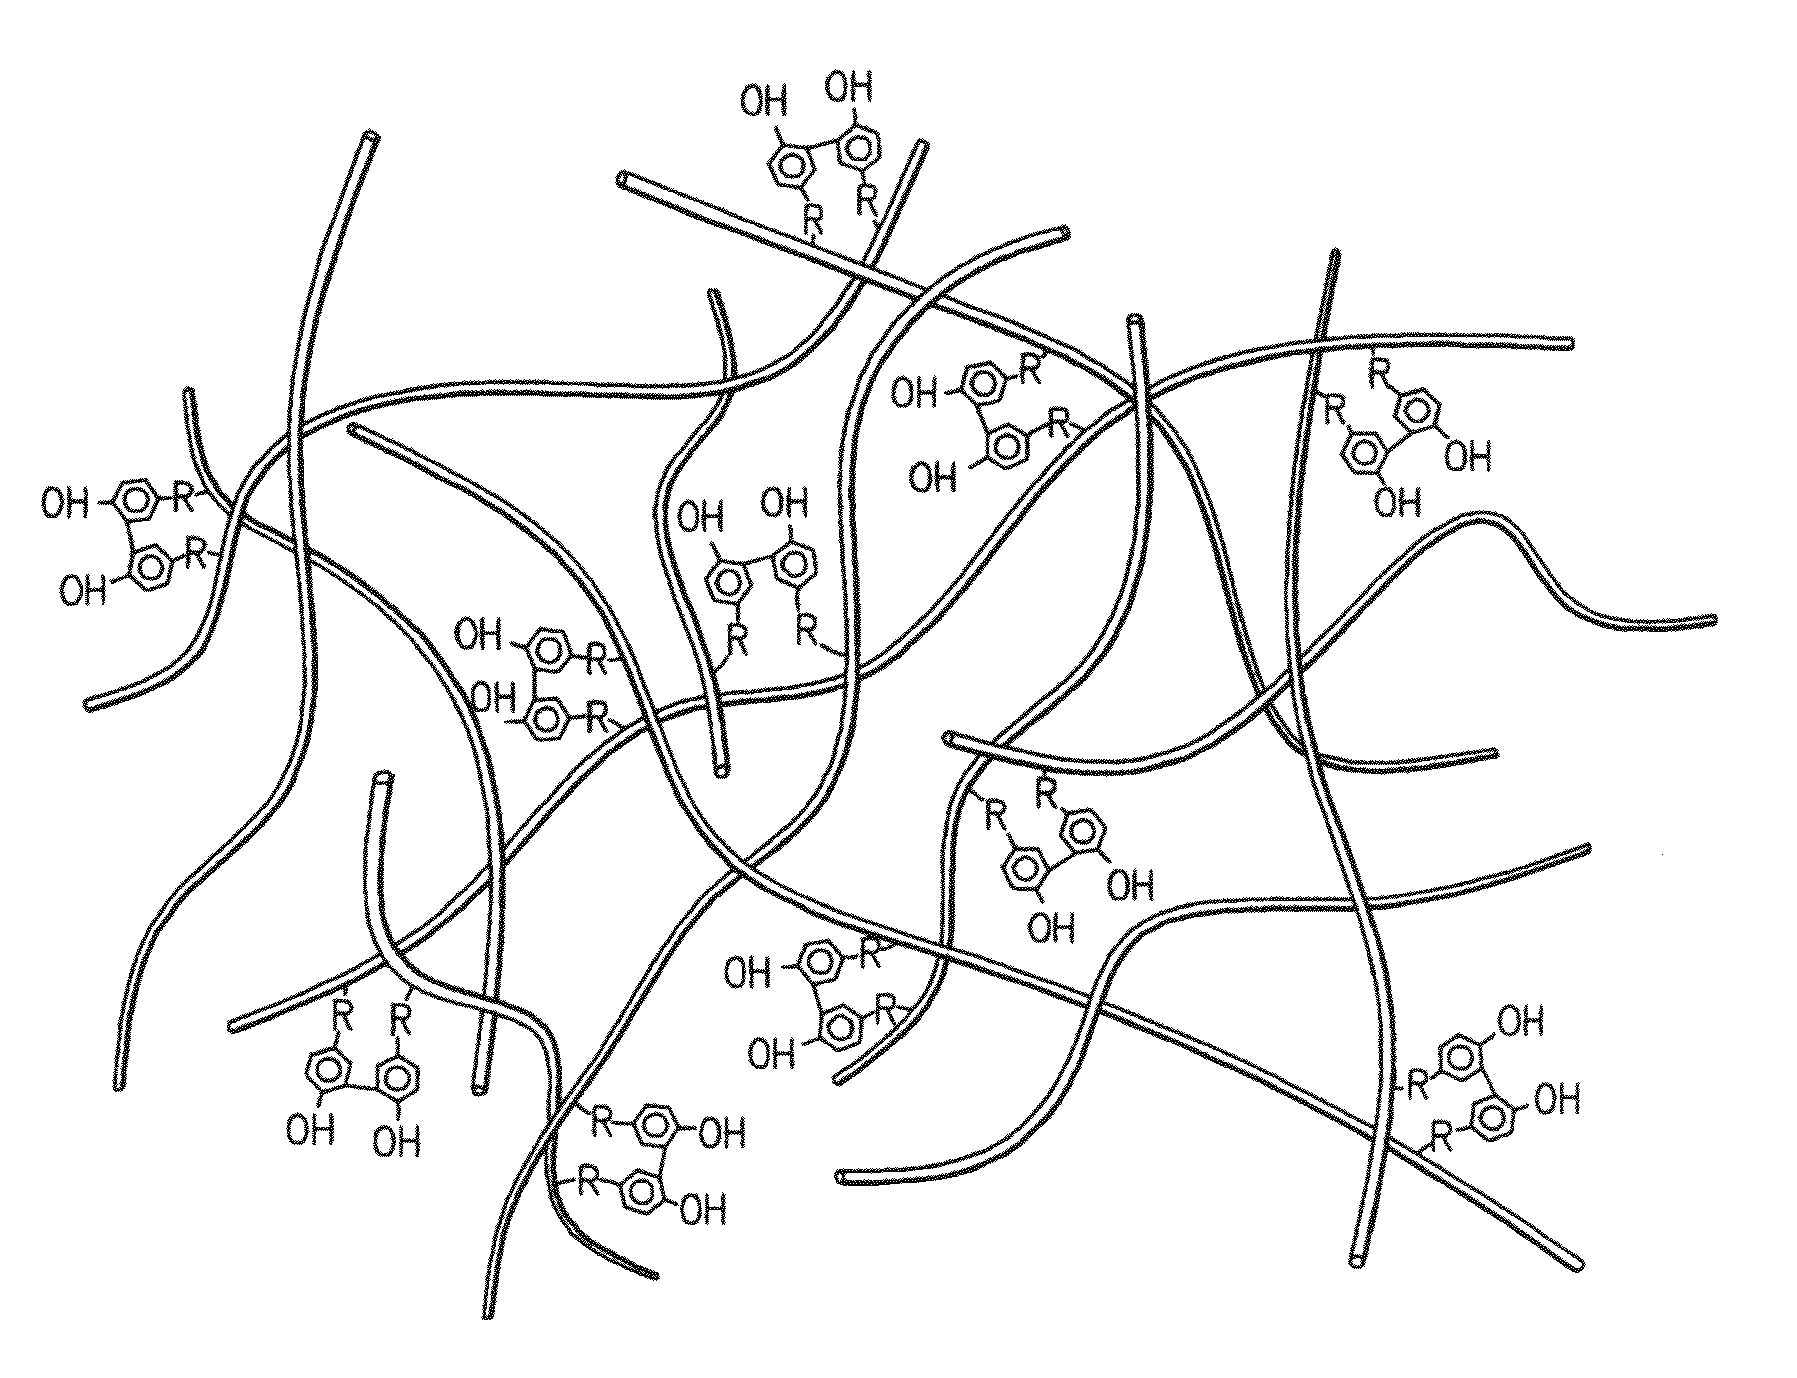 Hydroxyphenyl cross-linked macromolecular network